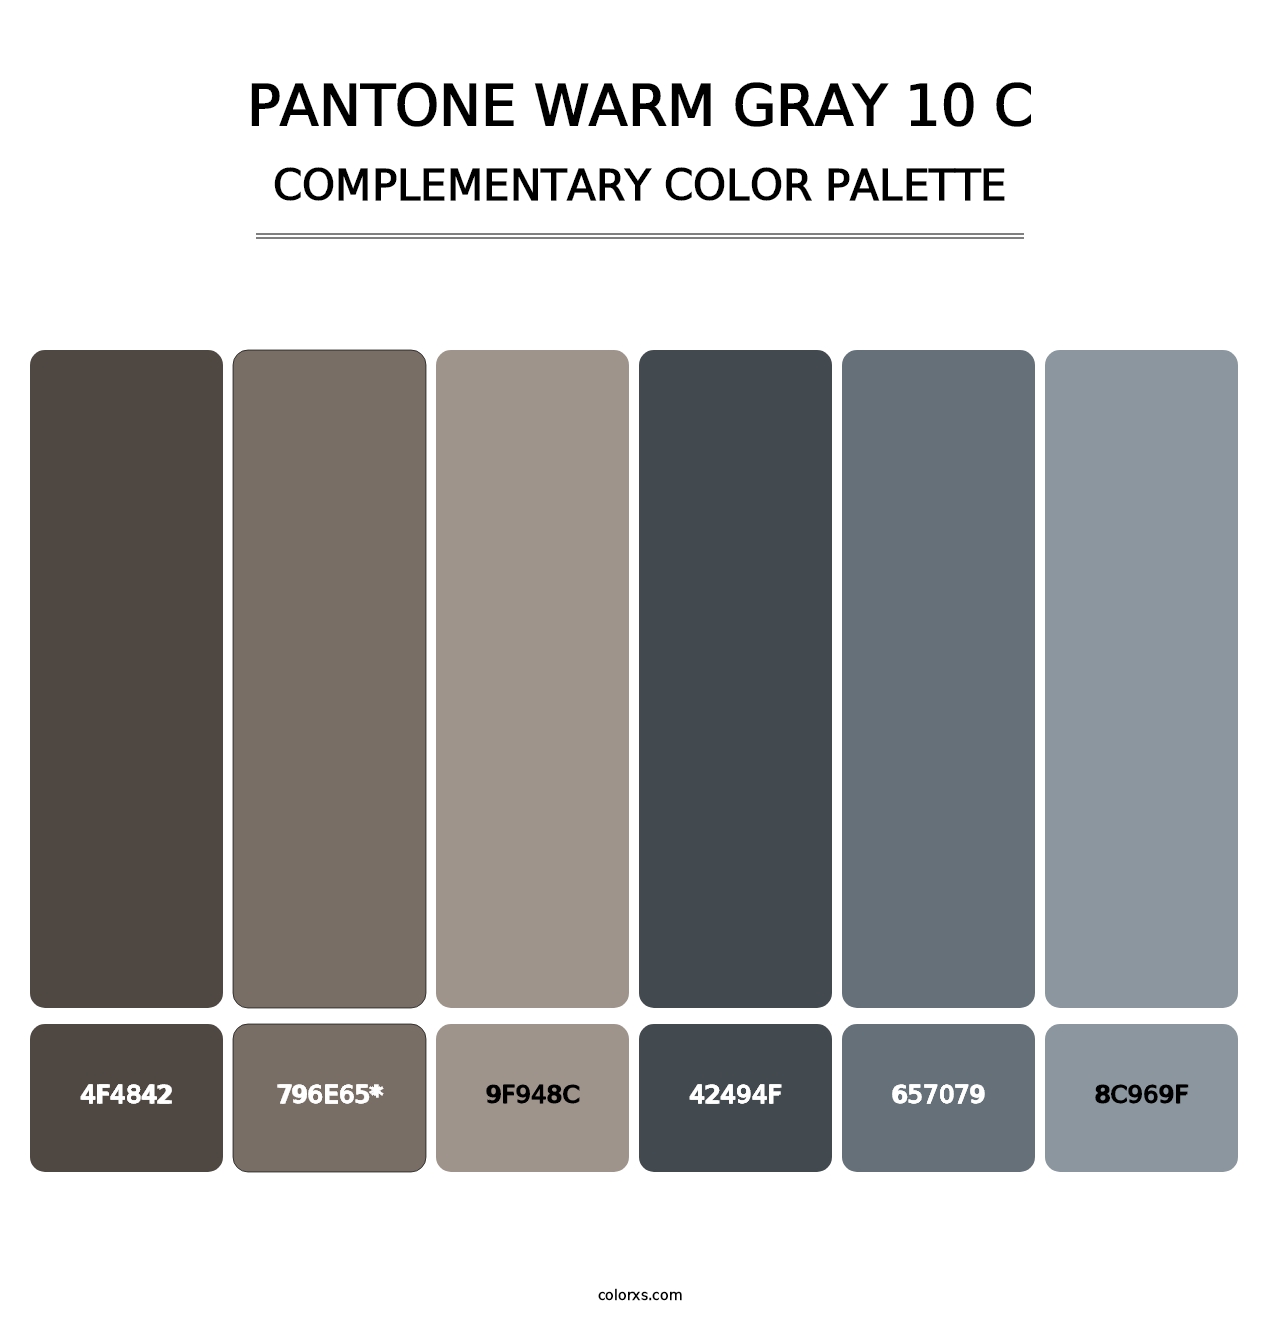 PANTONE Warm Gray 10 C - Complementary Color Palette